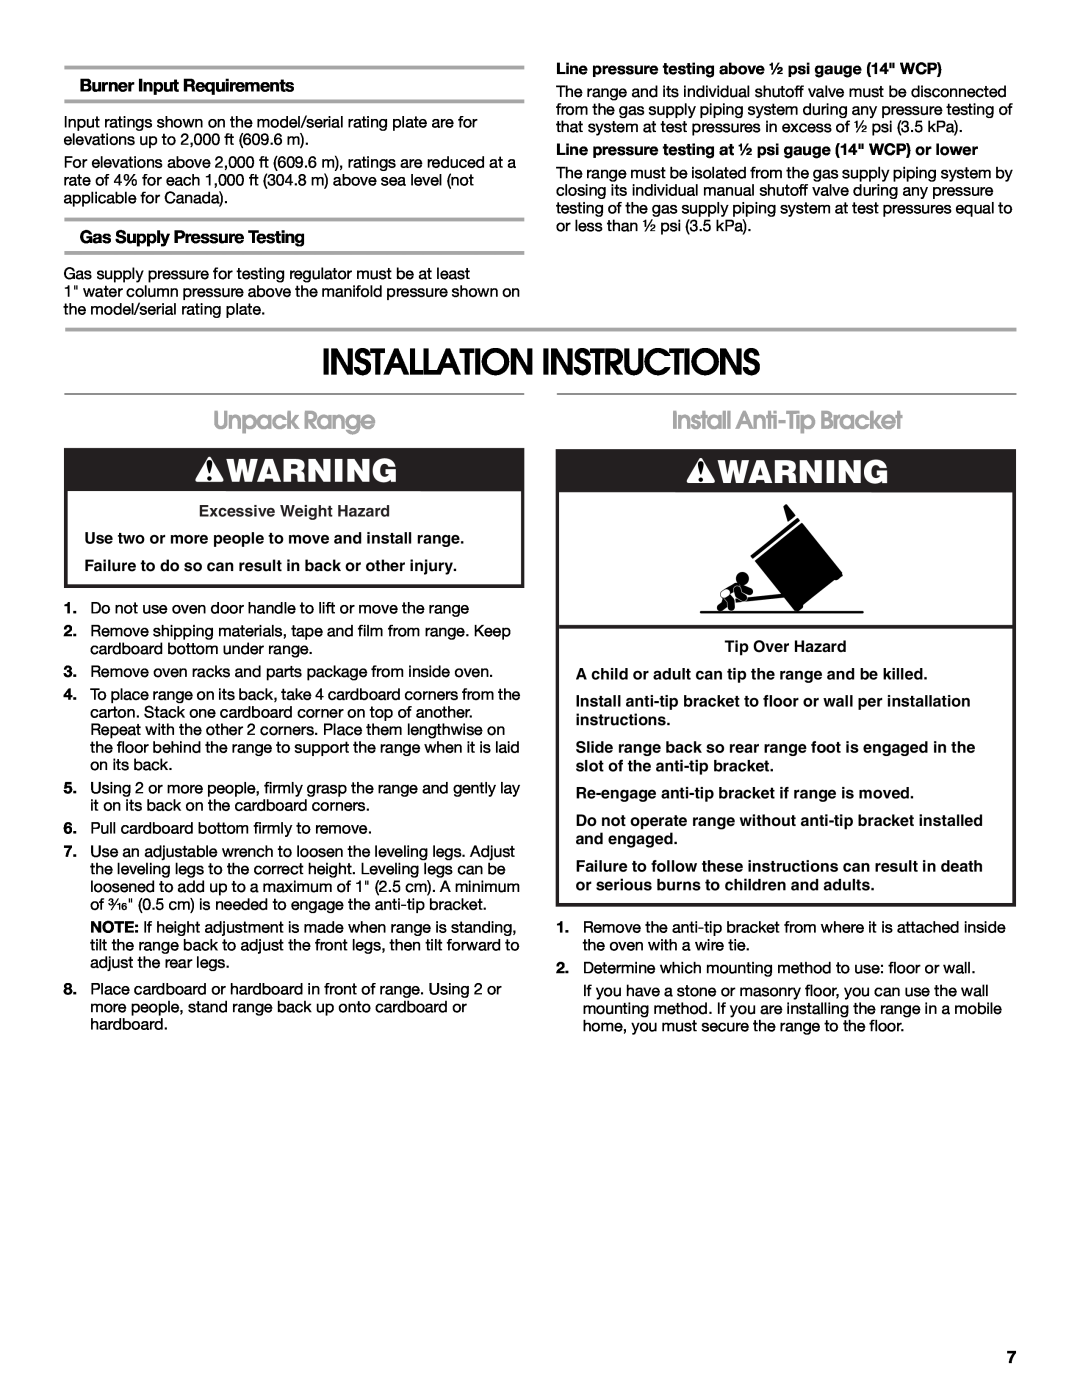 Whirlpool W10477533B Installation Instructions, Unpack Range, Install Anti-Tip Bracket, Burner Input Requirements 